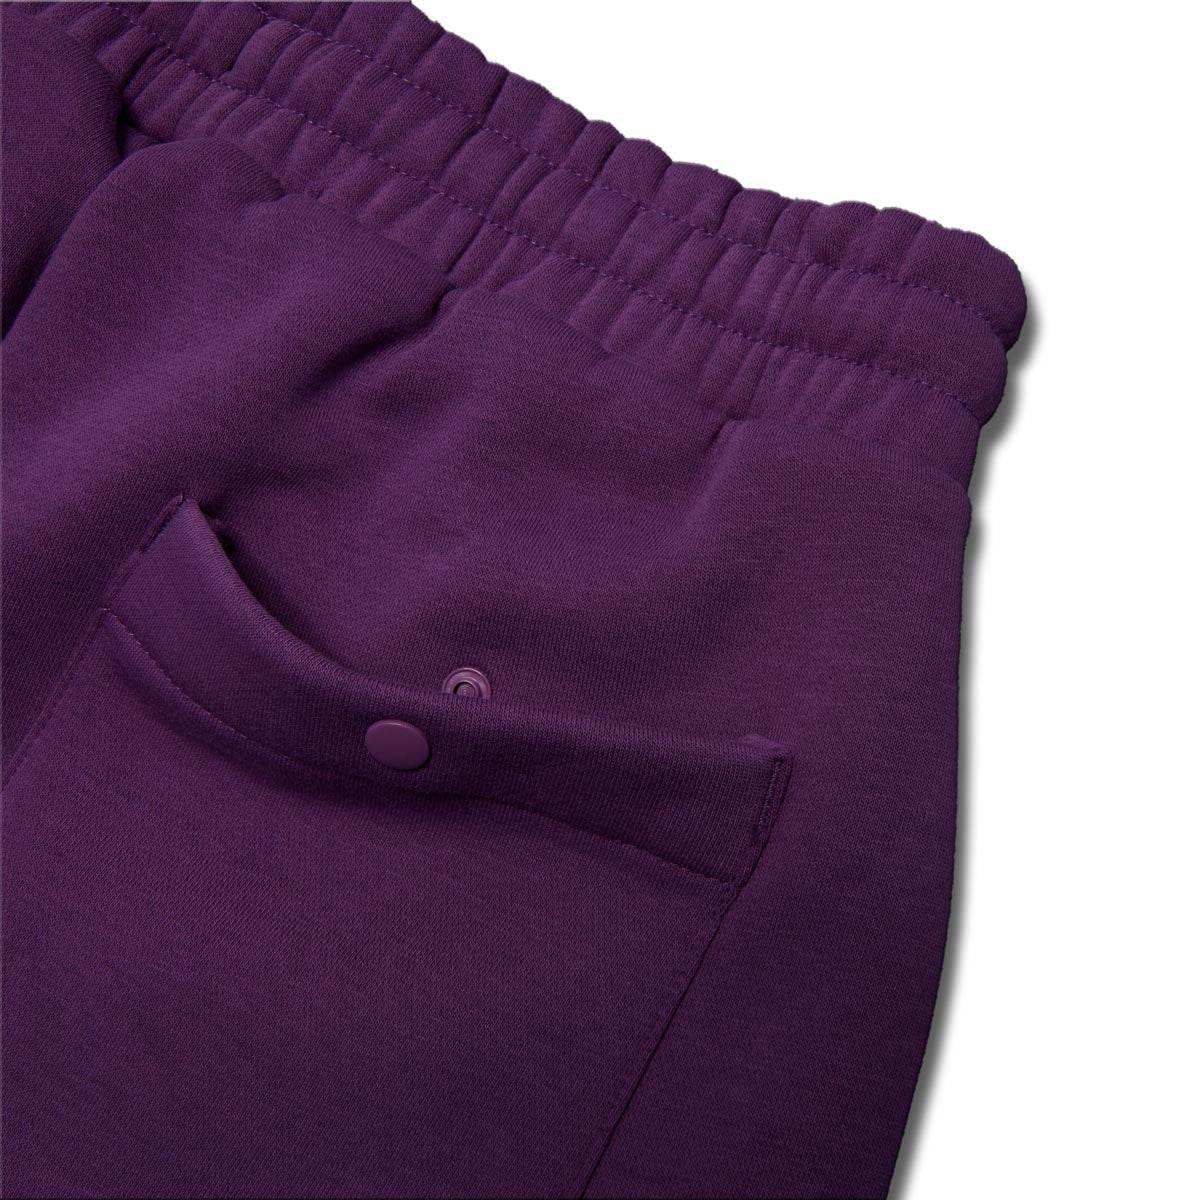 DGK Fire Blossom Fleece Shorts - Purple image 5